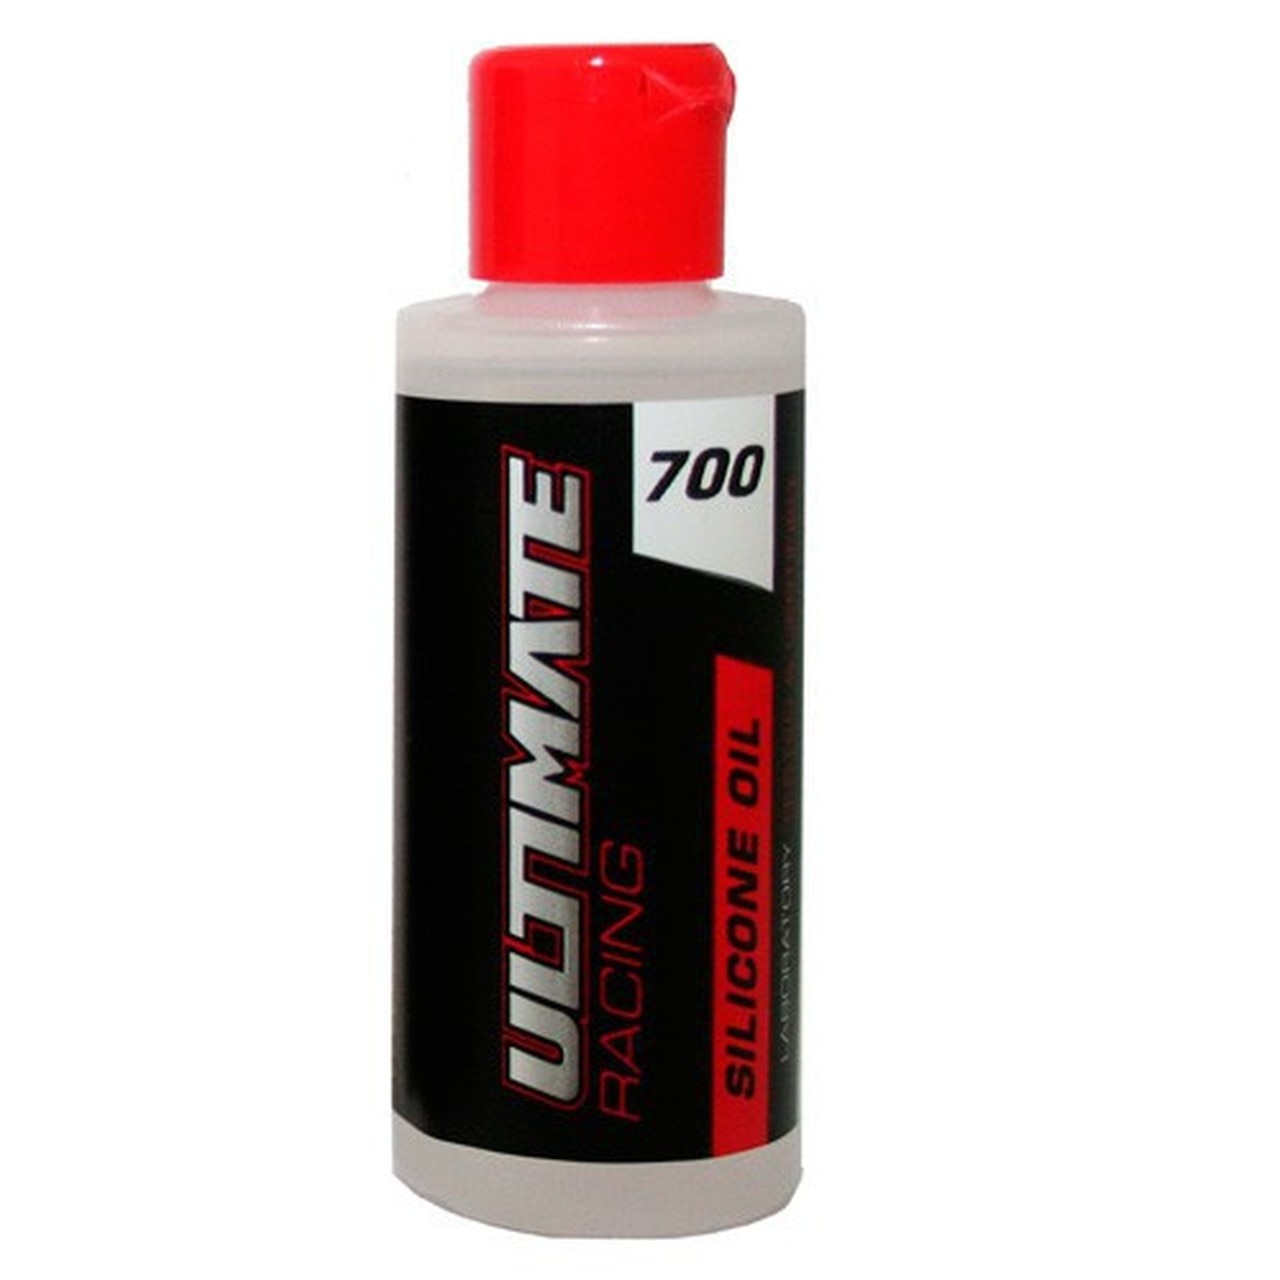 Aceite Ultimate Racing para amortiguadores 700 CPS (2OZ)